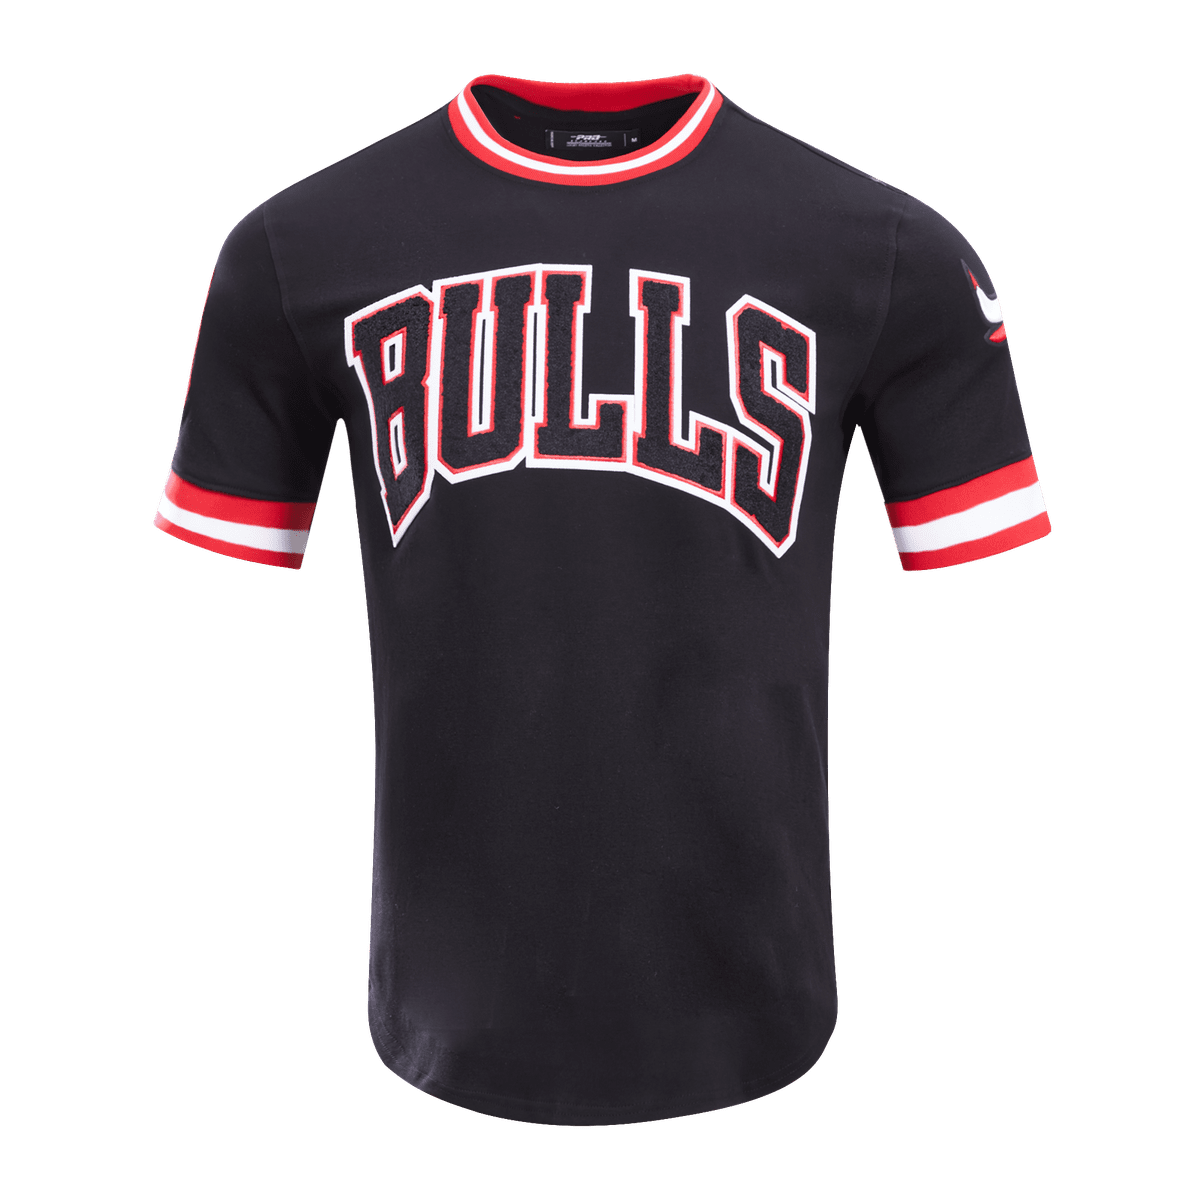 Pro Standard Mens NBA Chicago Bulls Pro Team T-Shirt BCB151539-BLK Black L / Black